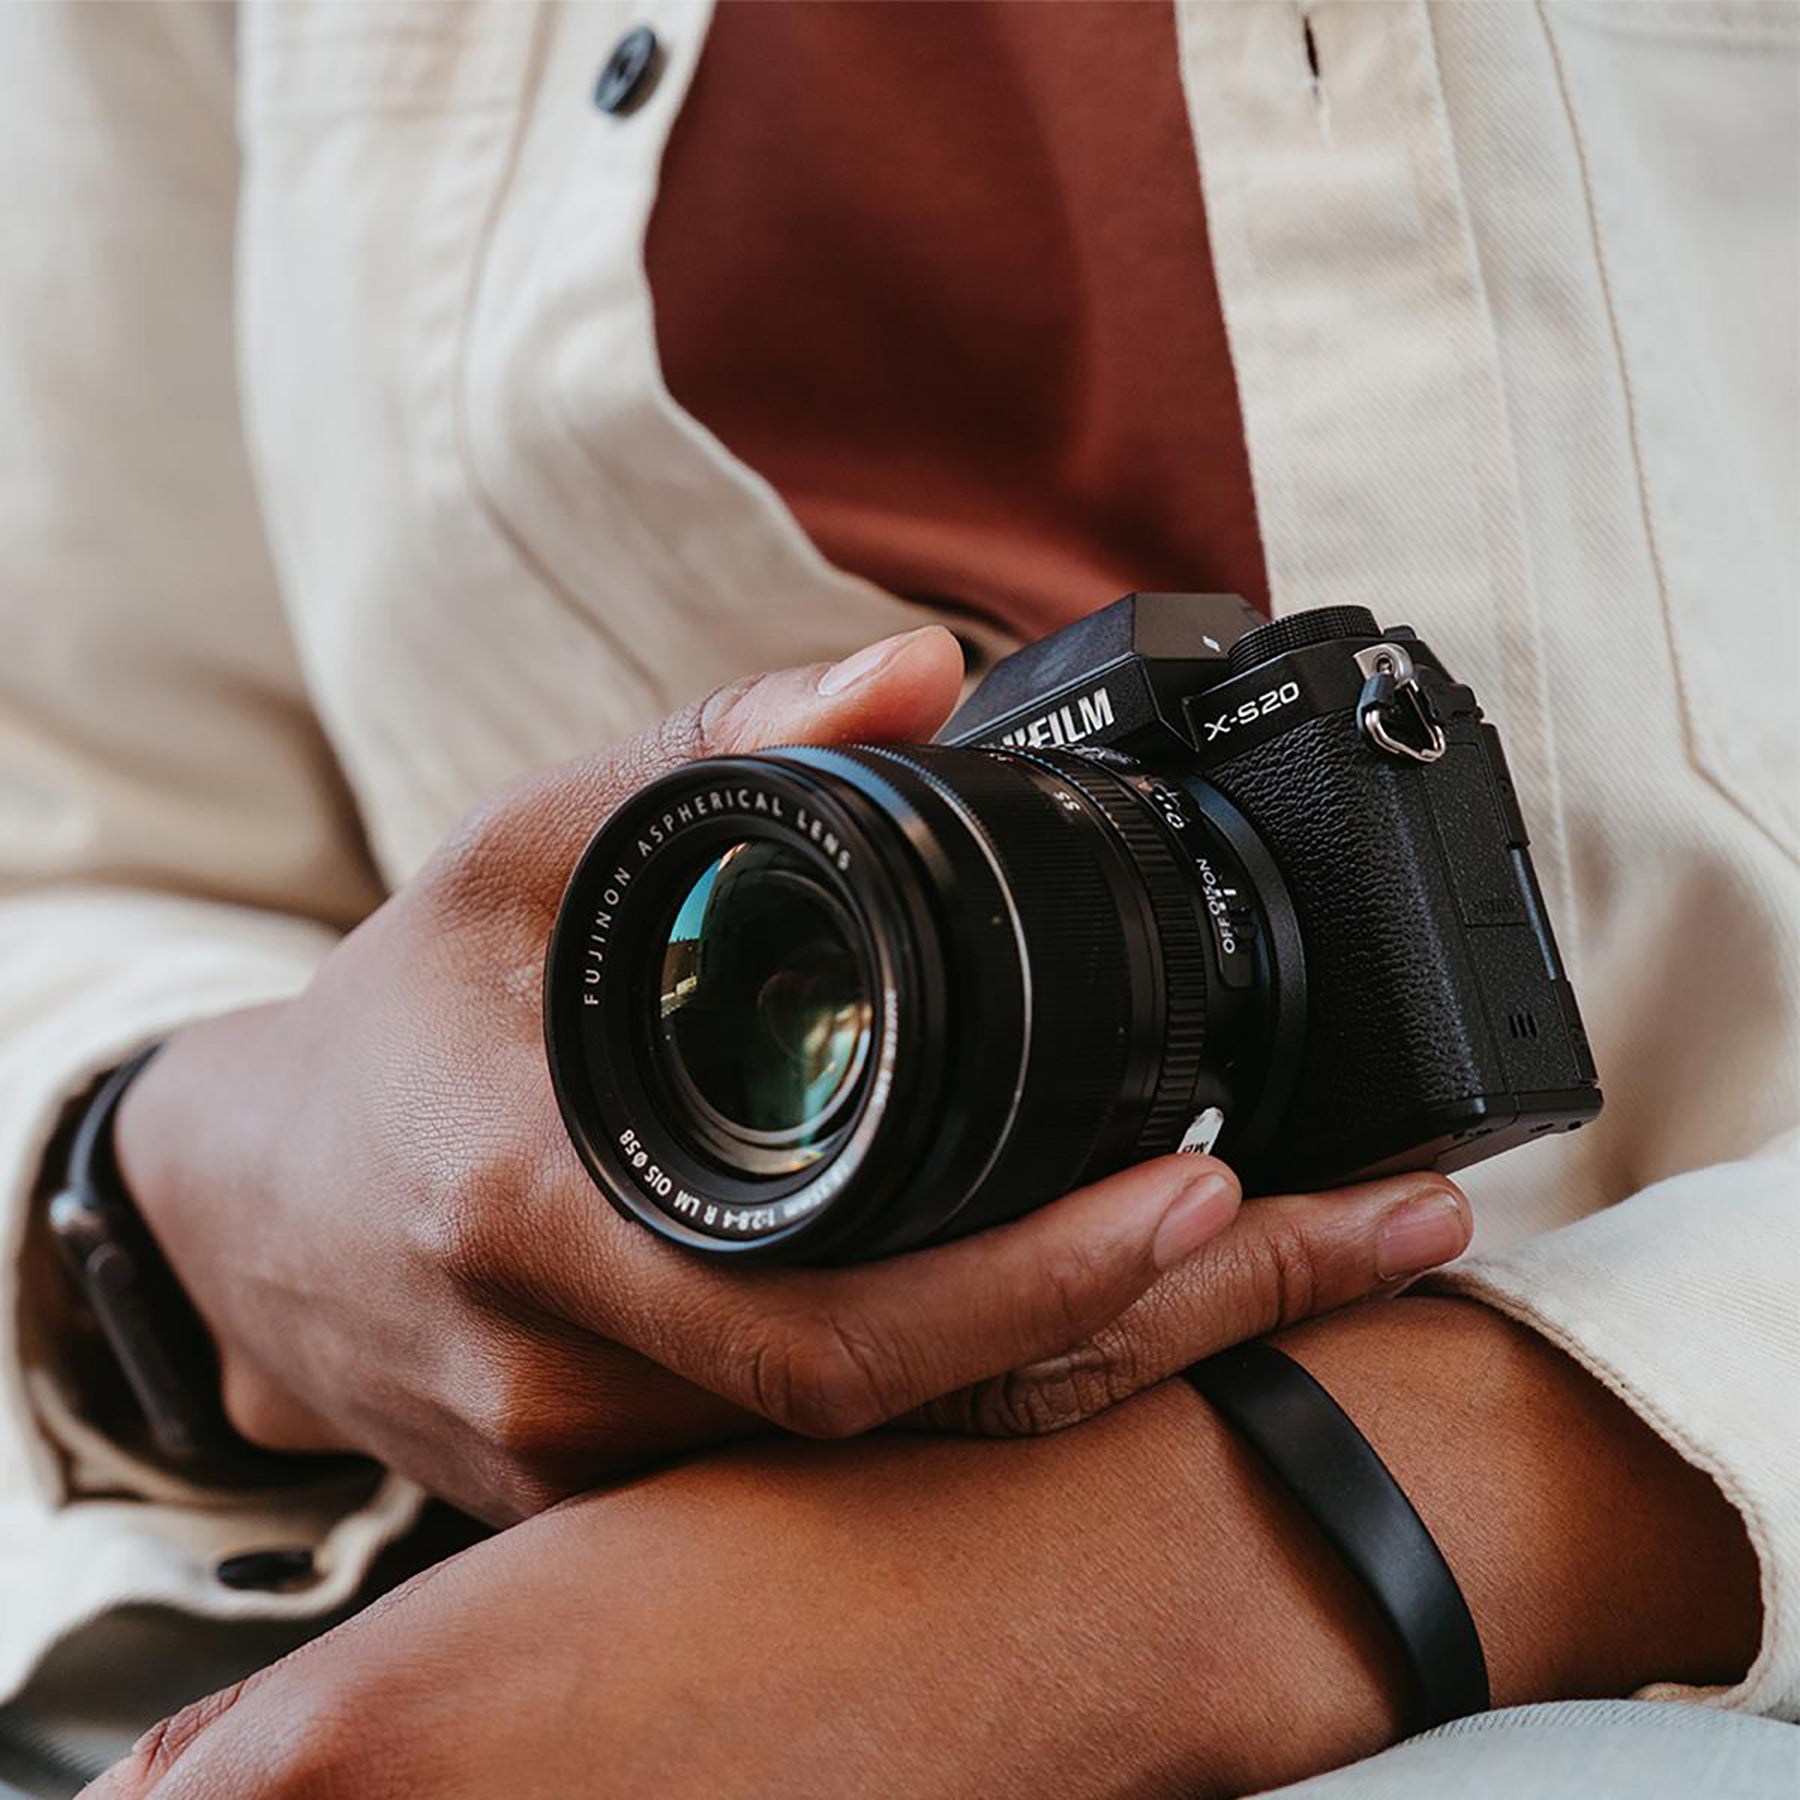 Fujifilm X-S20 mirrorless camera in a hand